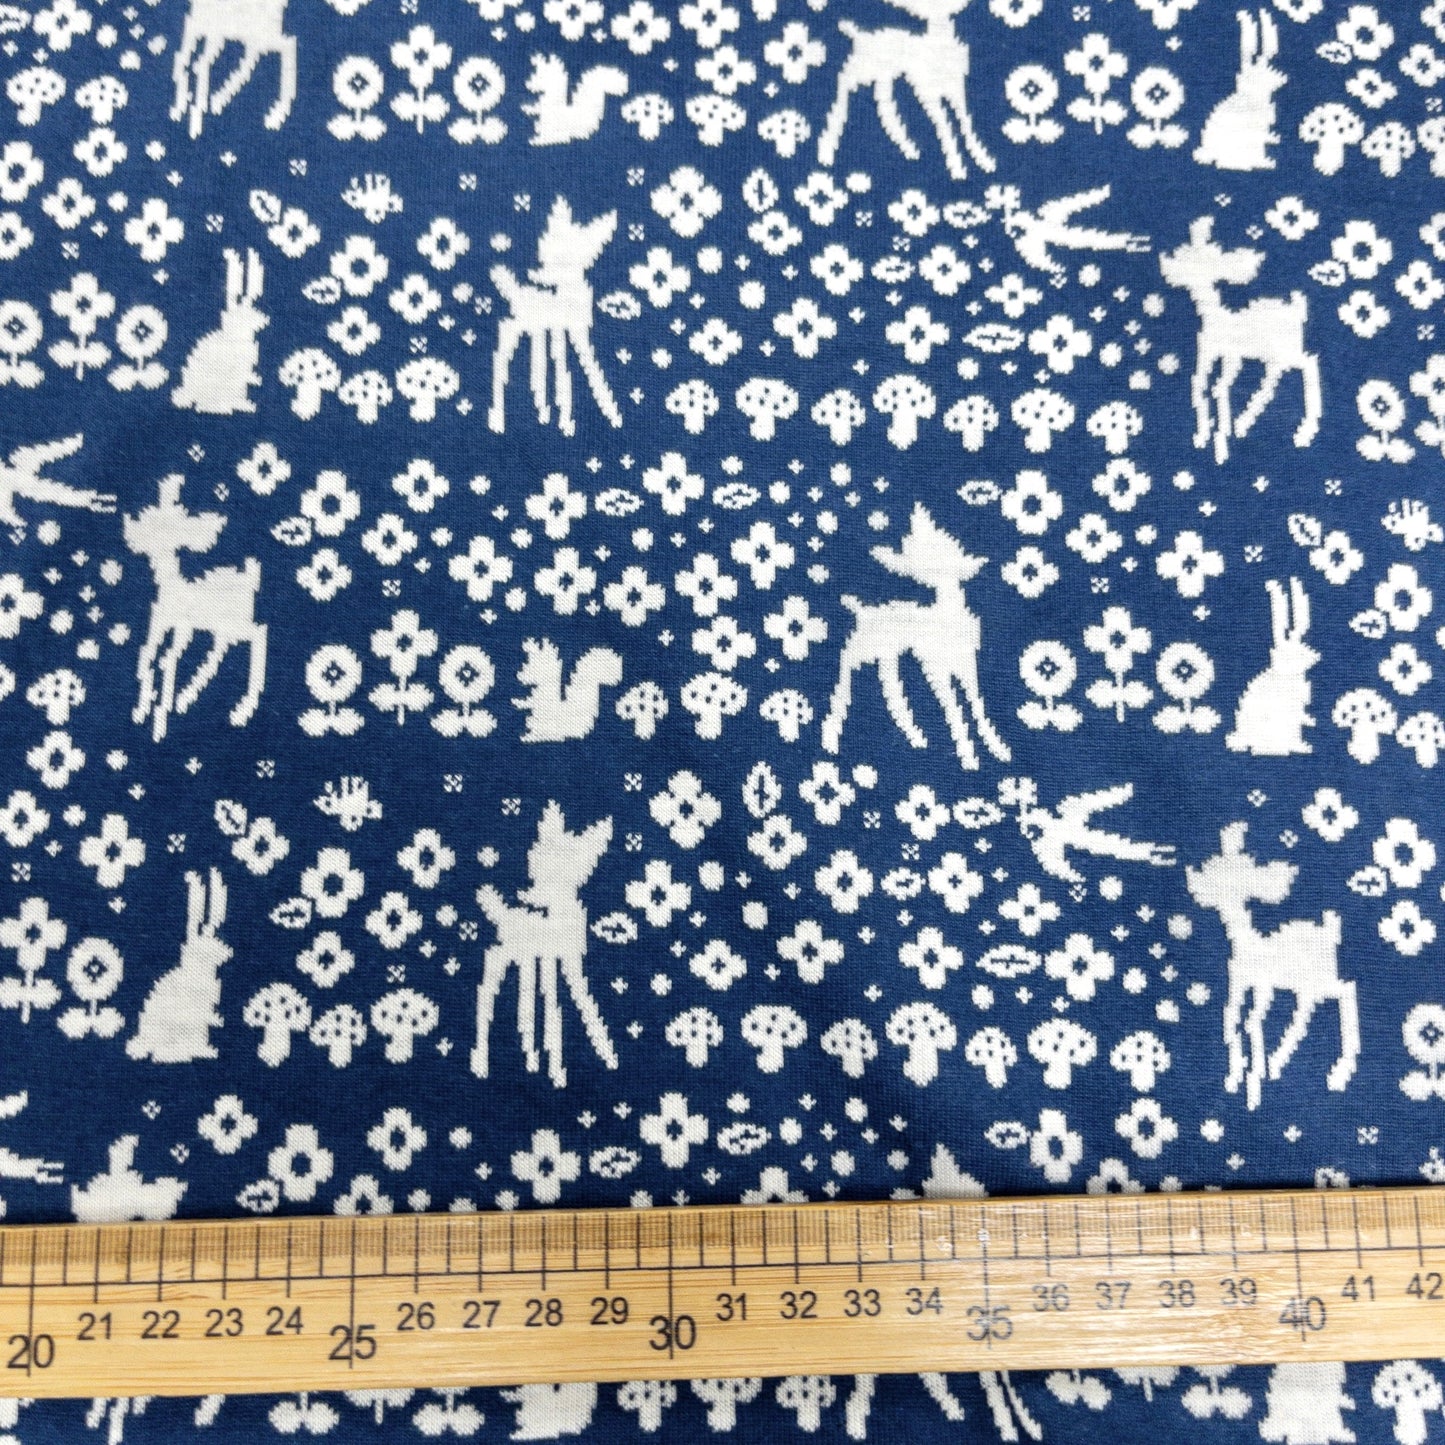 maffon | deer & flowers blue ivory 小鹿花海 藍+米色 | cotton jacquard knit 雙面純棉提花針織 - 160cm